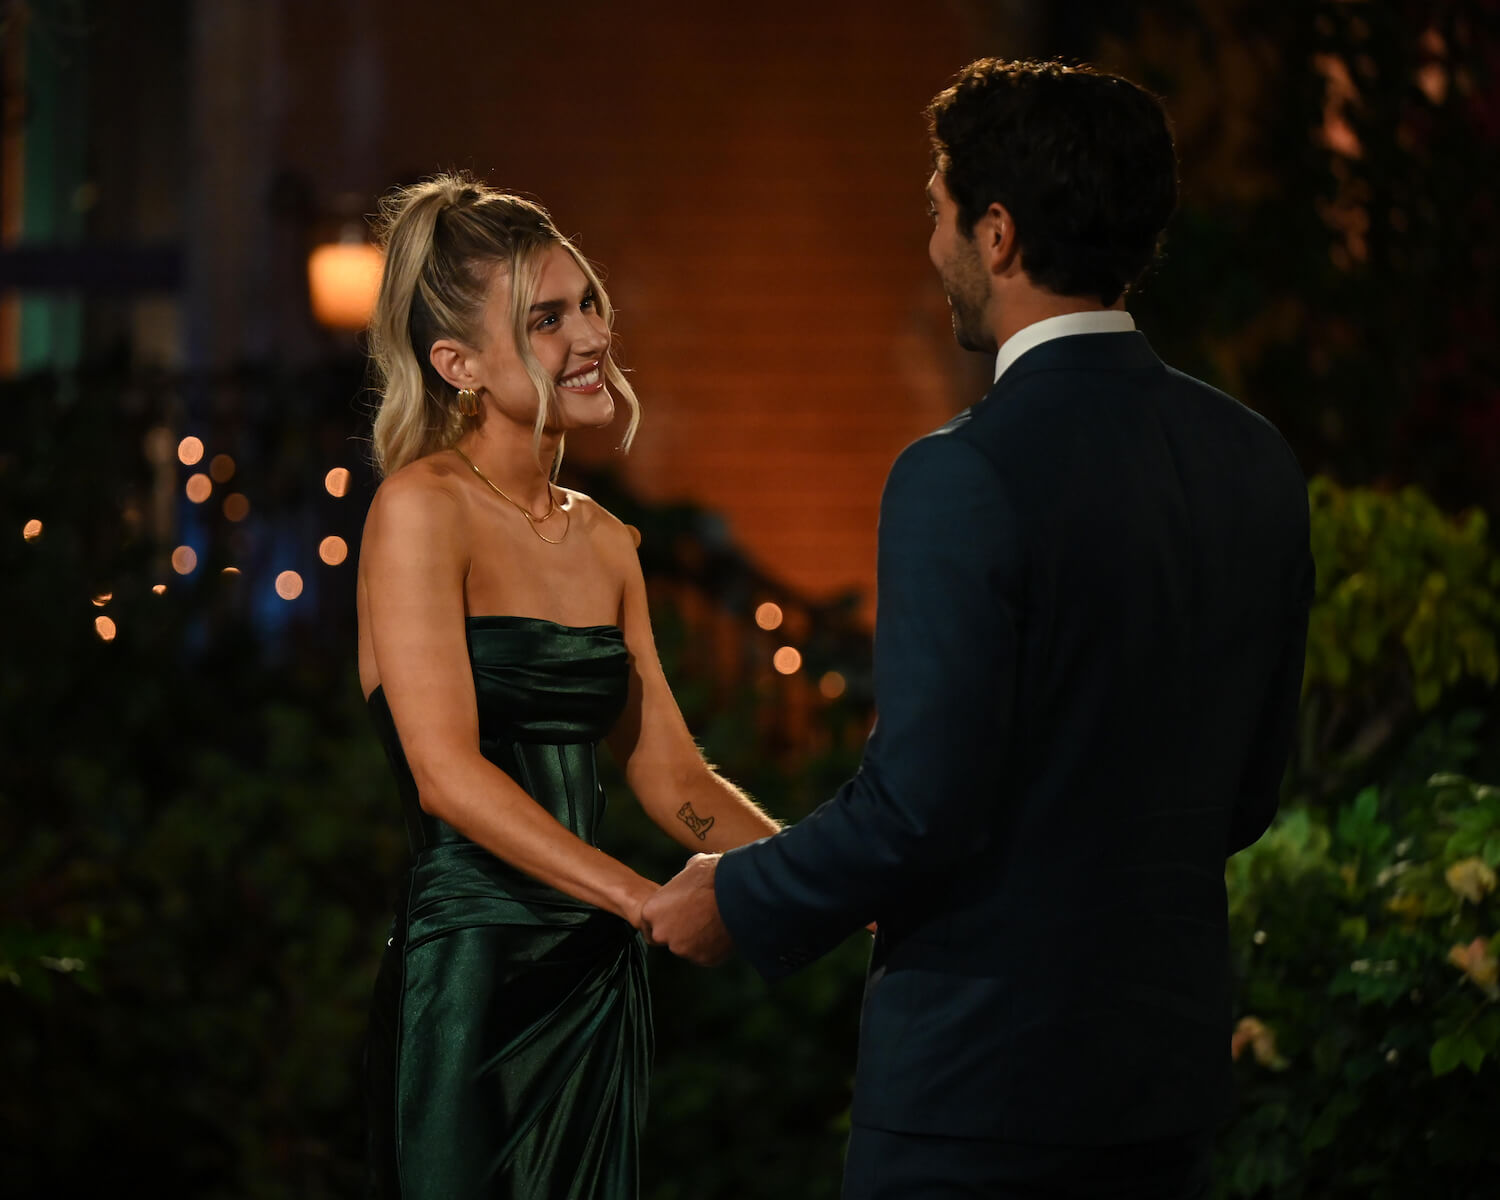 'The Bachelor' Season 28 contestant Sydney Gordon meeting Joey Graziadei on night 1